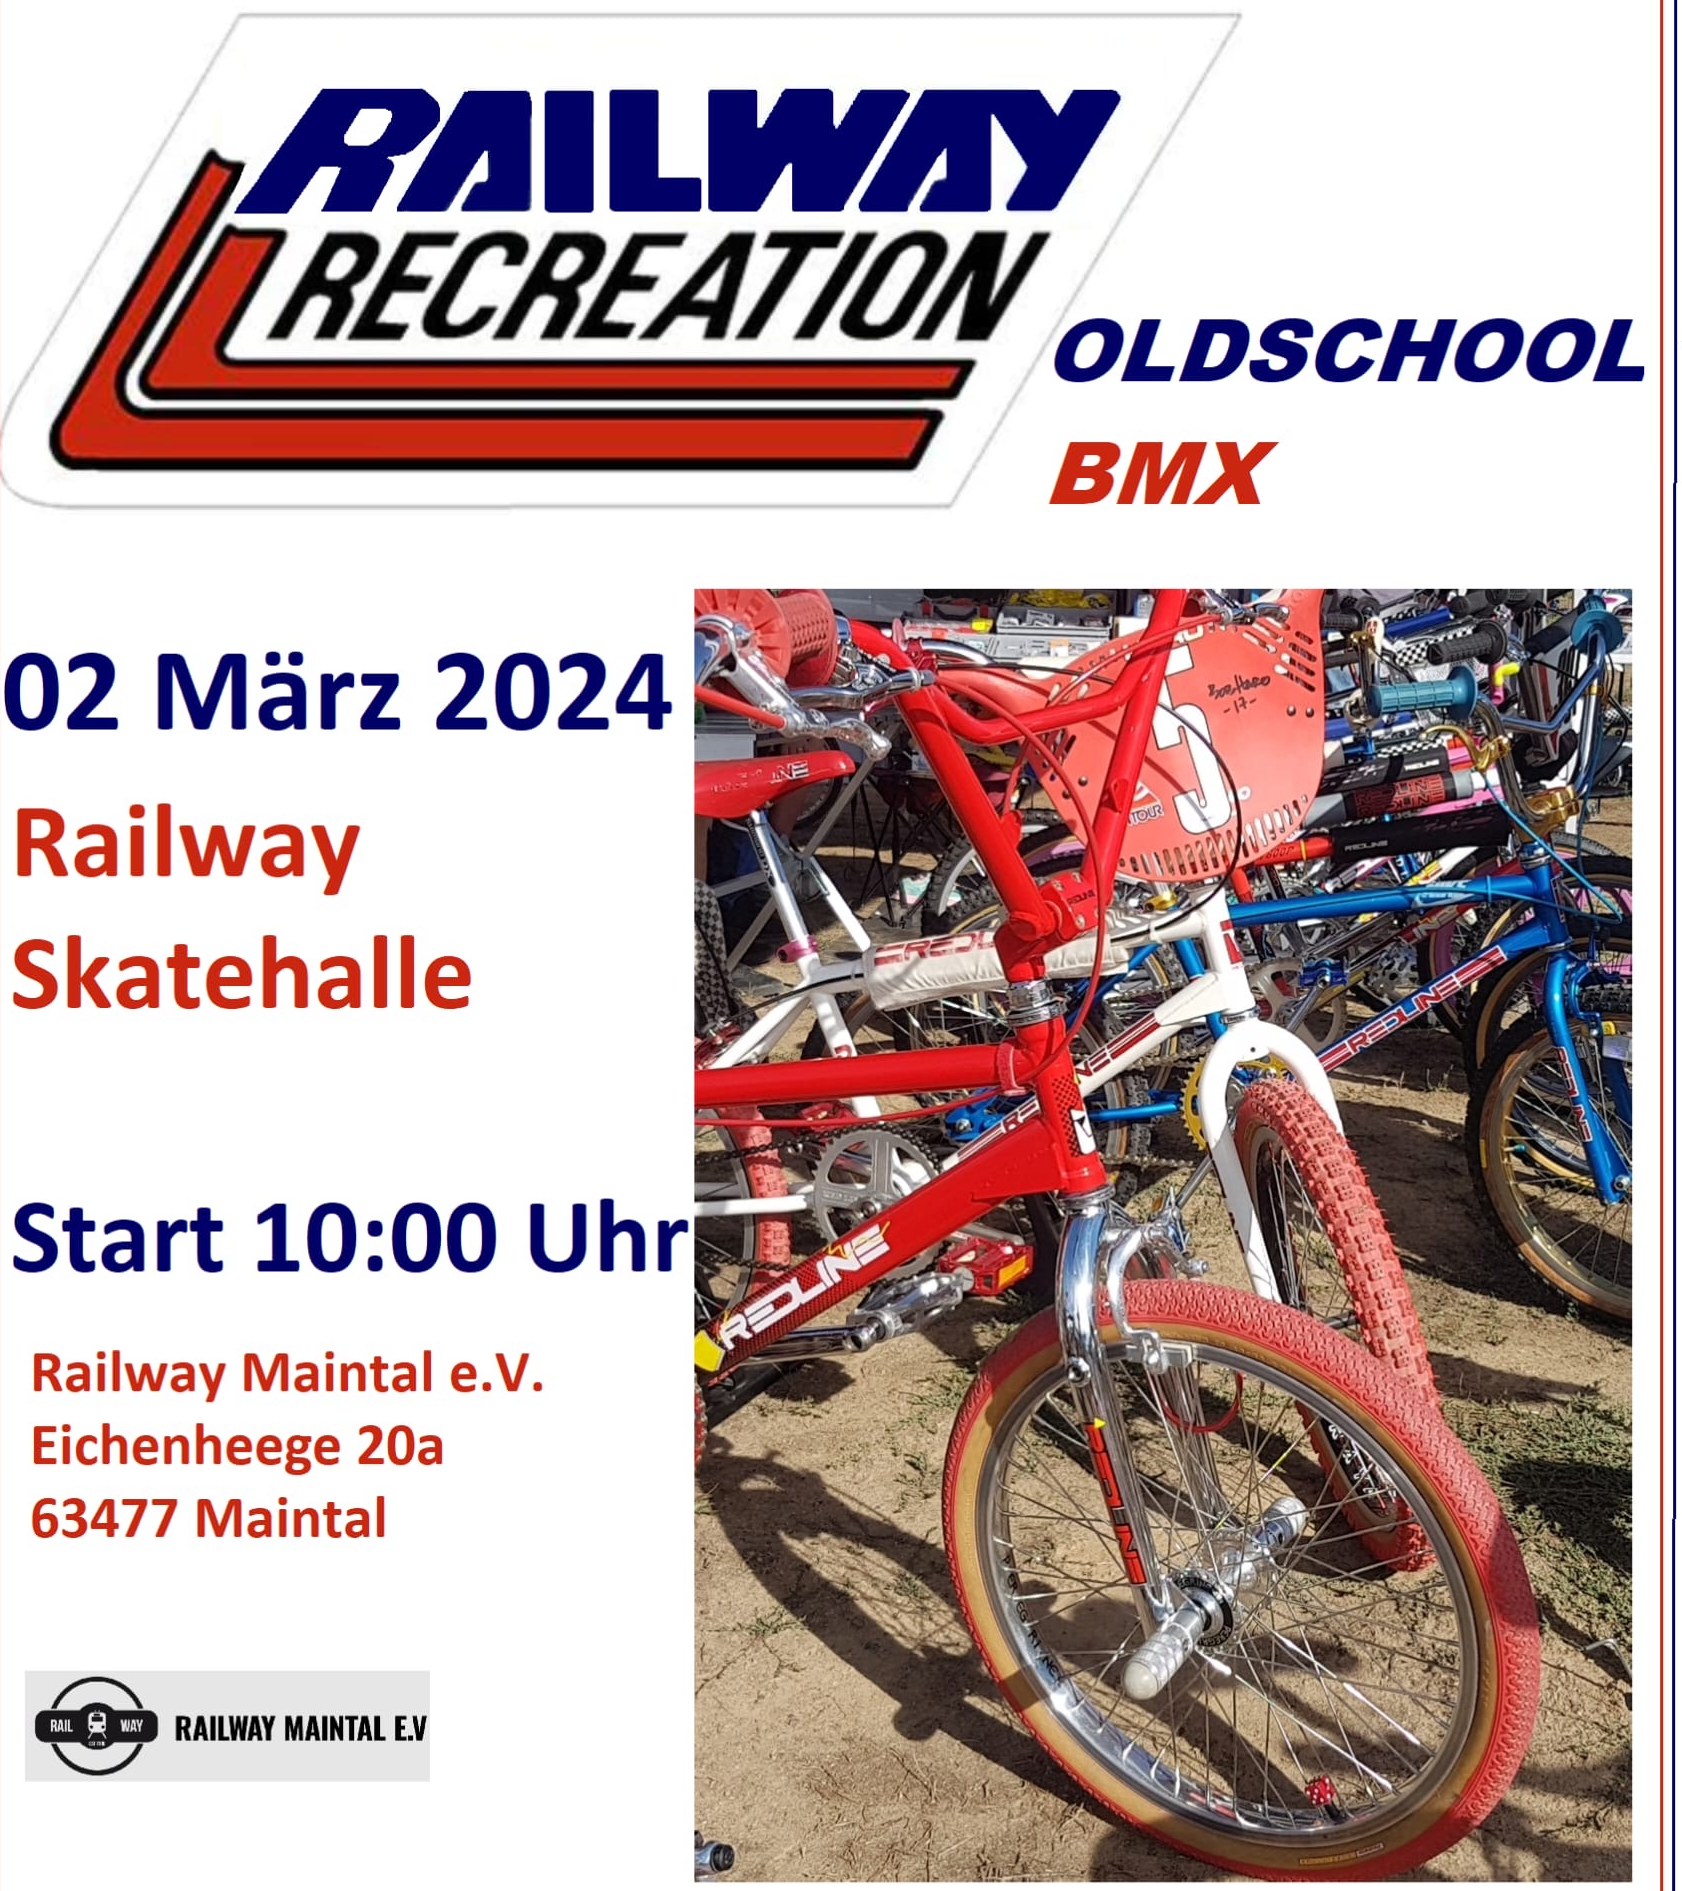 Railway Recreation – Oldschool BMX